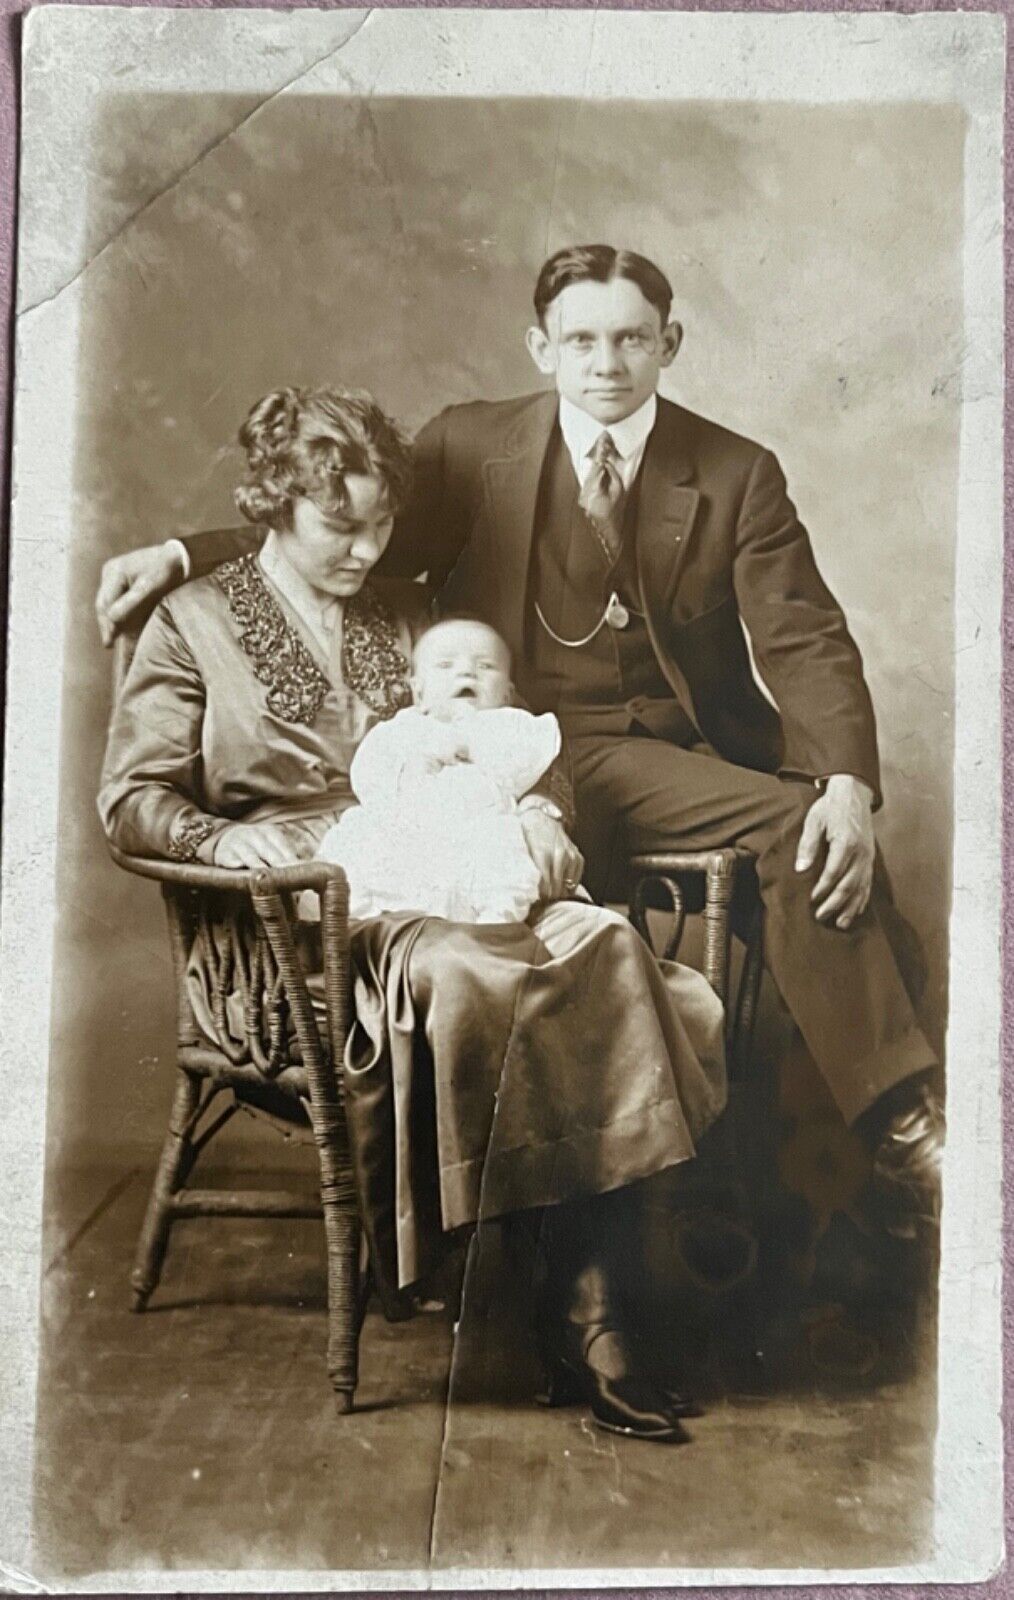 Baby Robert Schnaufer with Parents Vintage RPPC Real Photo Postcard c1920